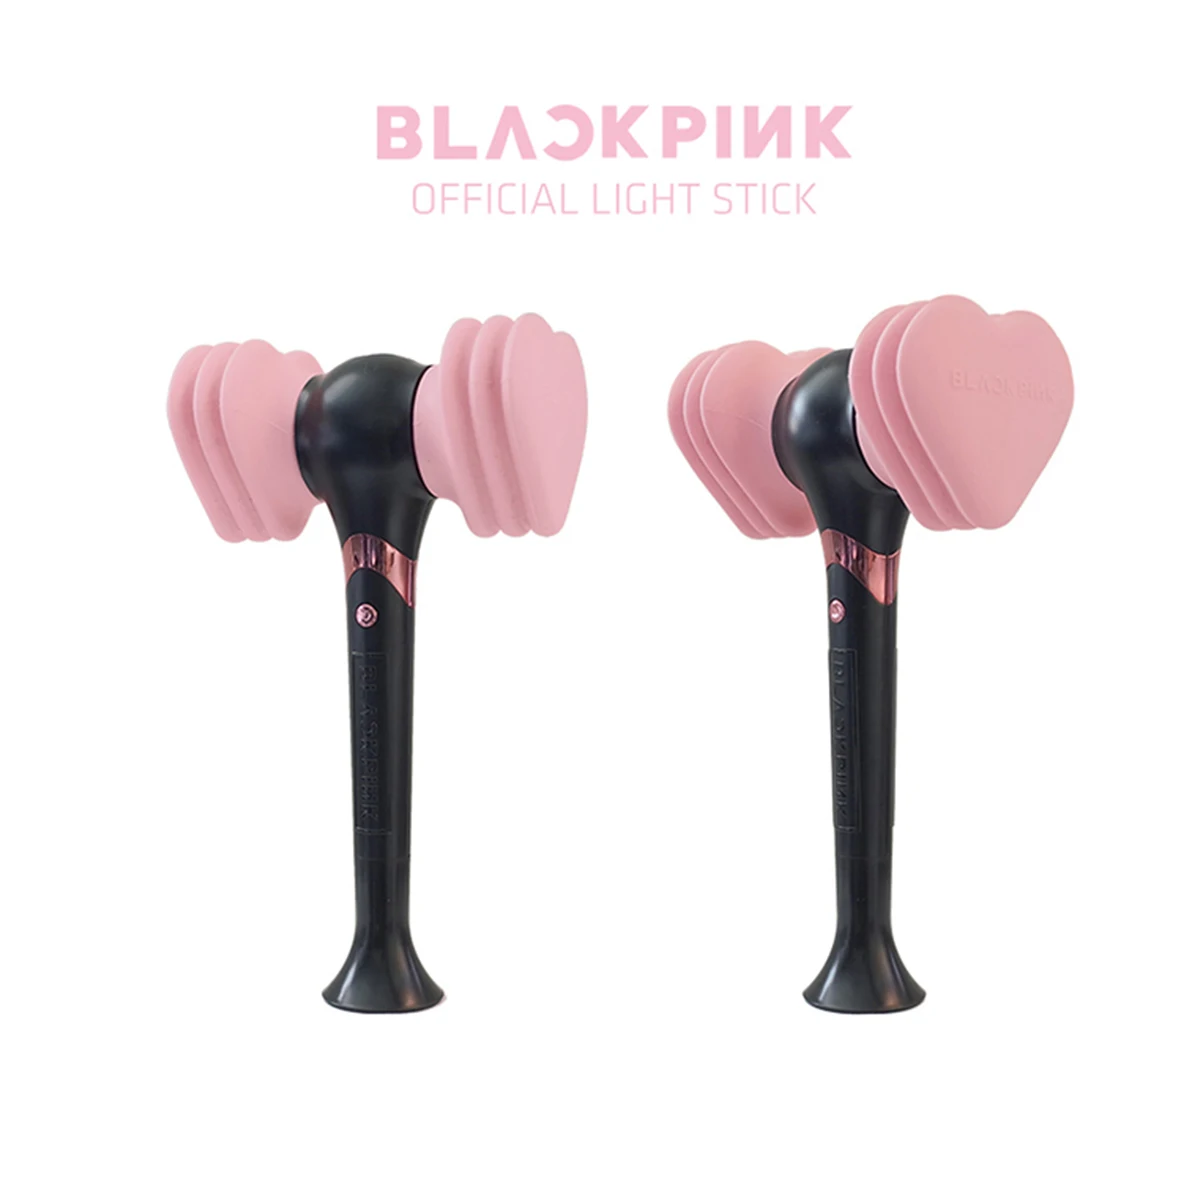 Official Black Pink Lightstick Concert Light Glowing Hammer Glow Stick  Jisoo Lisa Jennie Pink Fan Gift Shiny Led Novelty Toy - Night Lights -  AliExpress